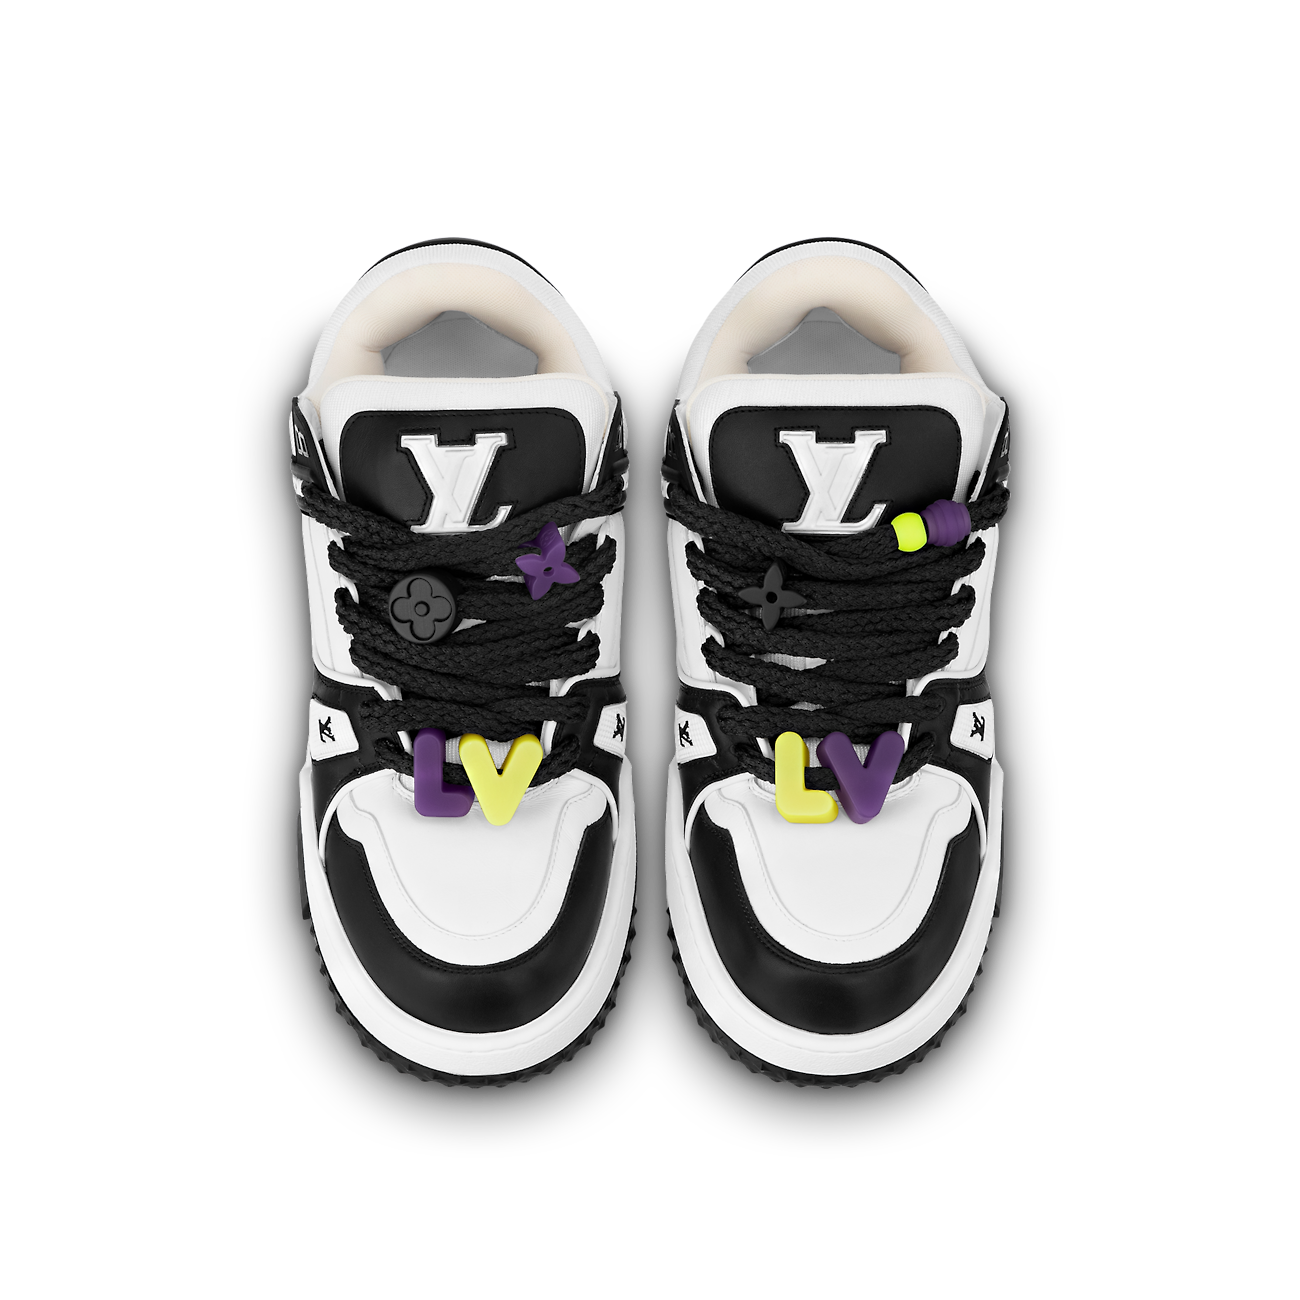 Louis Vuitton Trainer Maxi “Black/White” Sneakers in Lagos Island (Eko) -  Shoes, Rush Plug